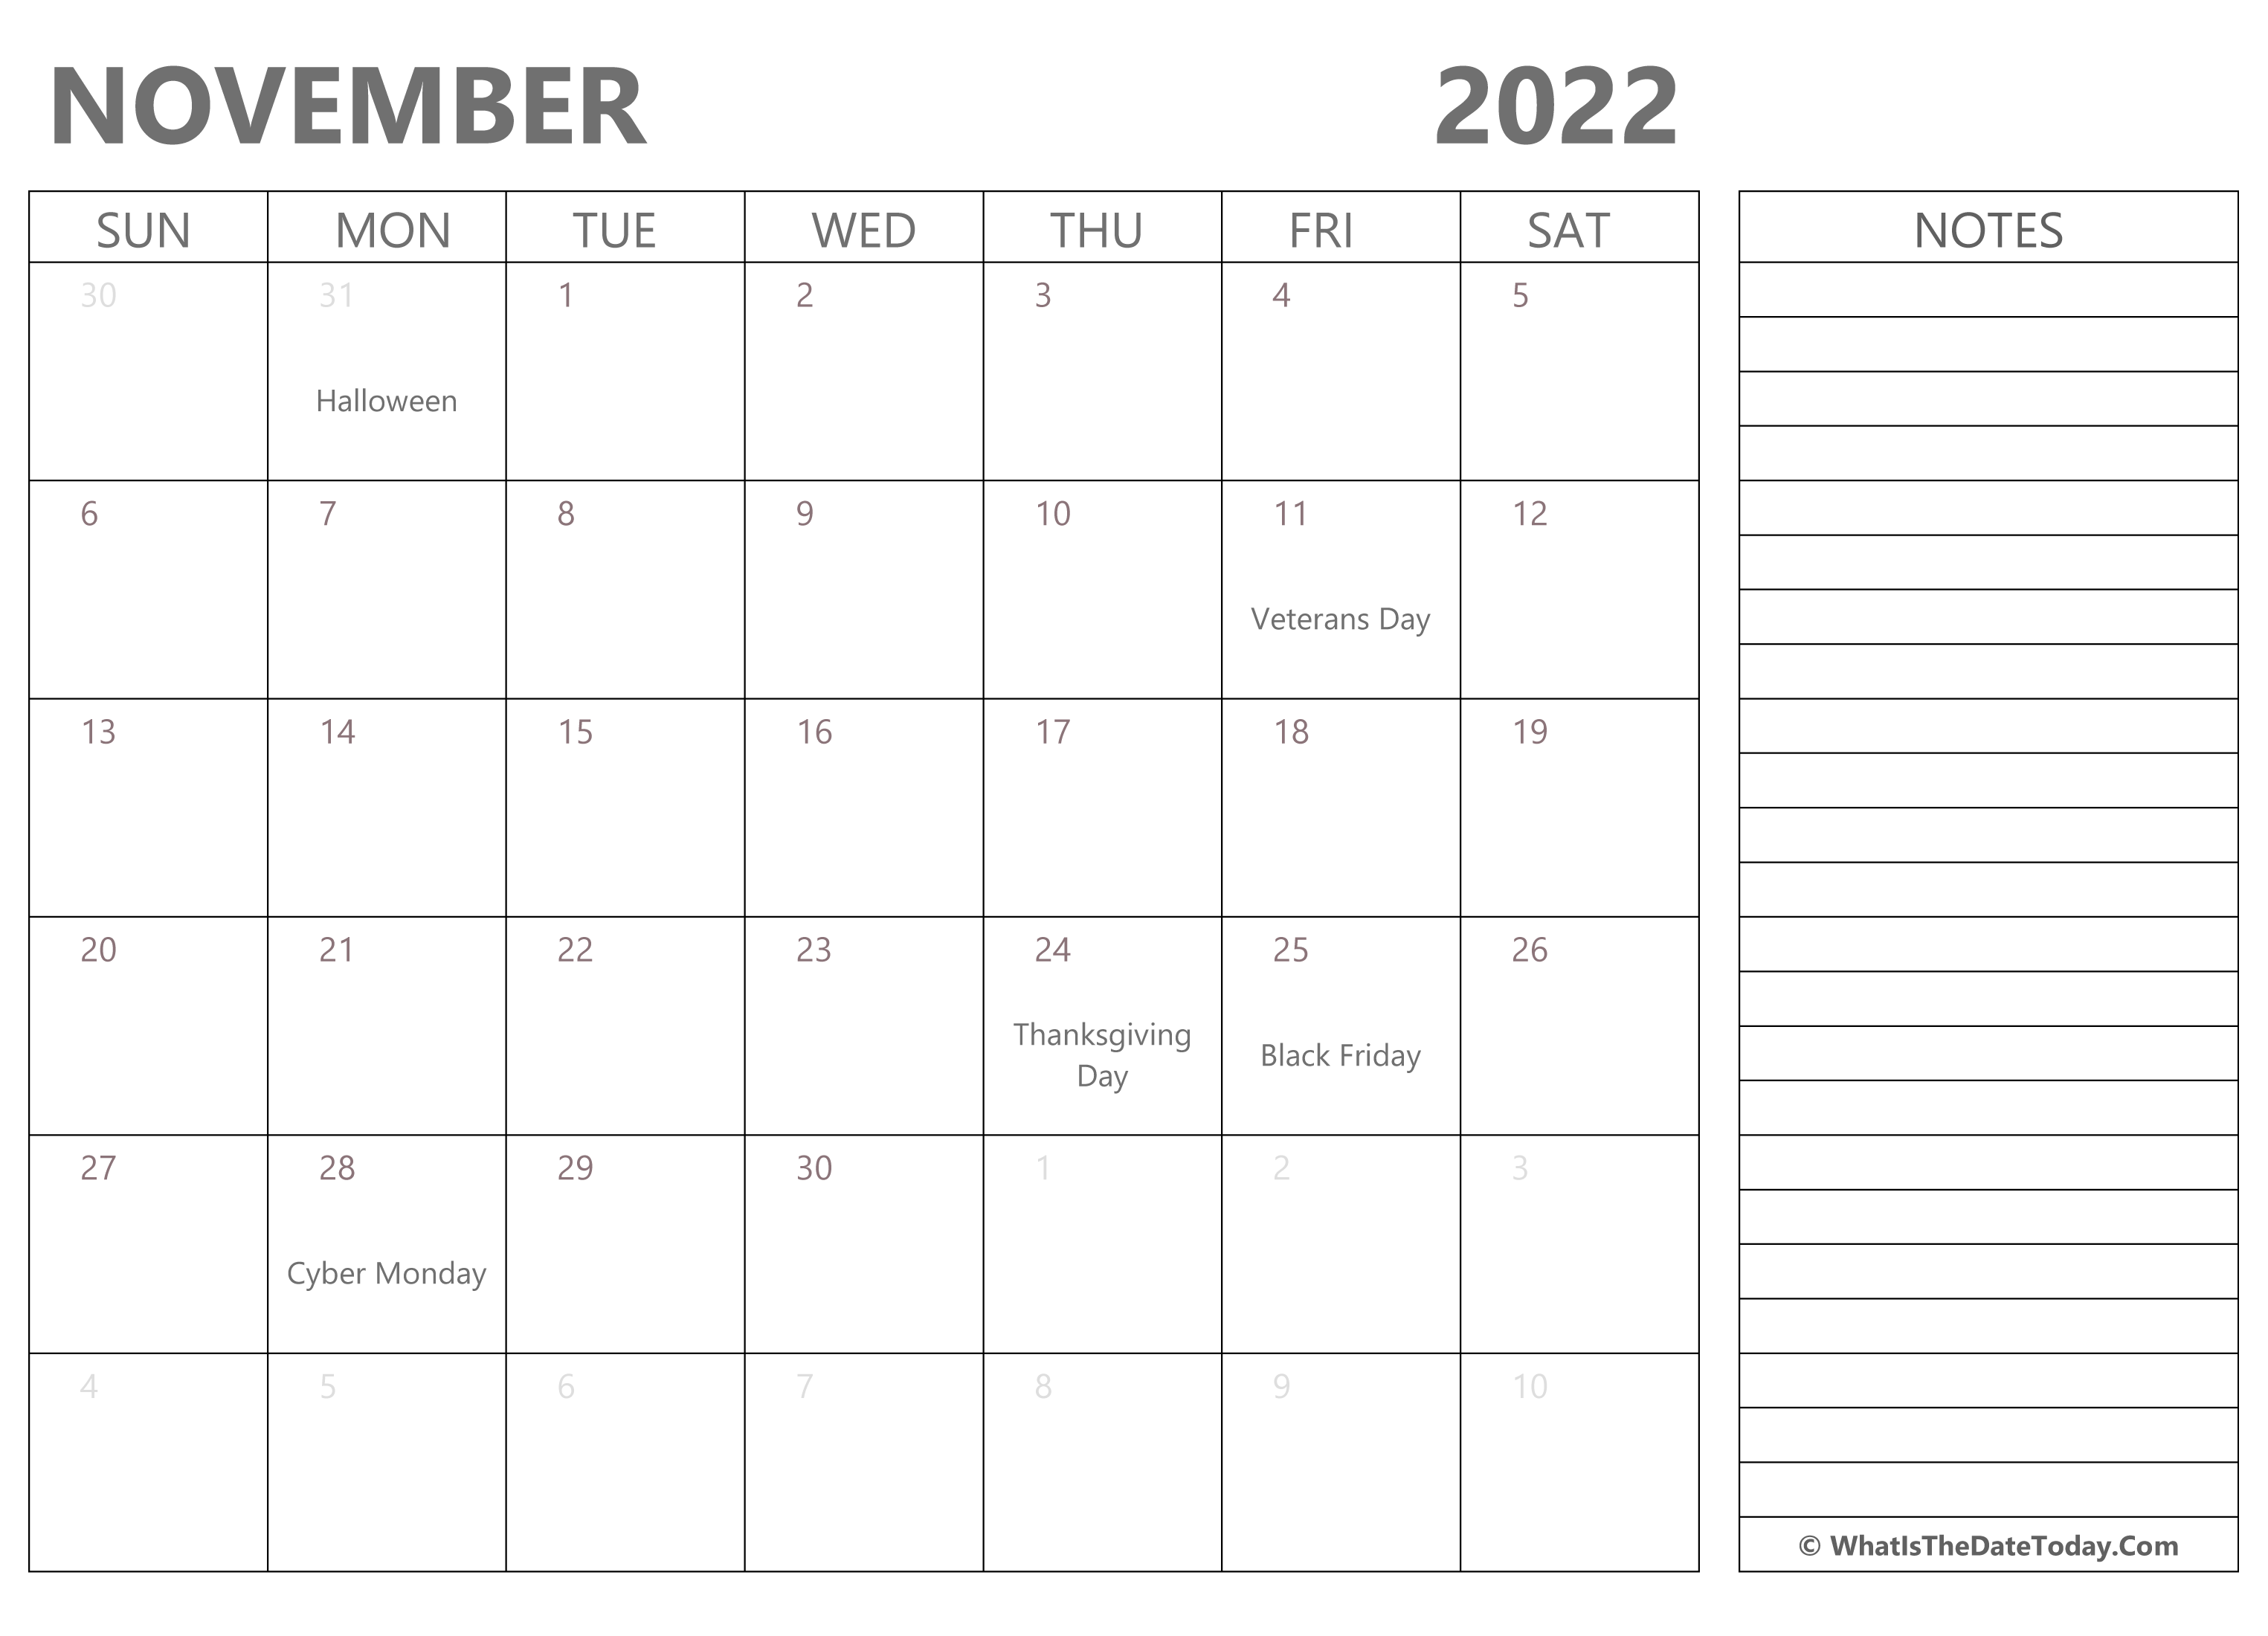 November 2022 Editable Calendar Editable November 2022 Calendar With Holidays And Notes |  Whatisthedatetoday.com